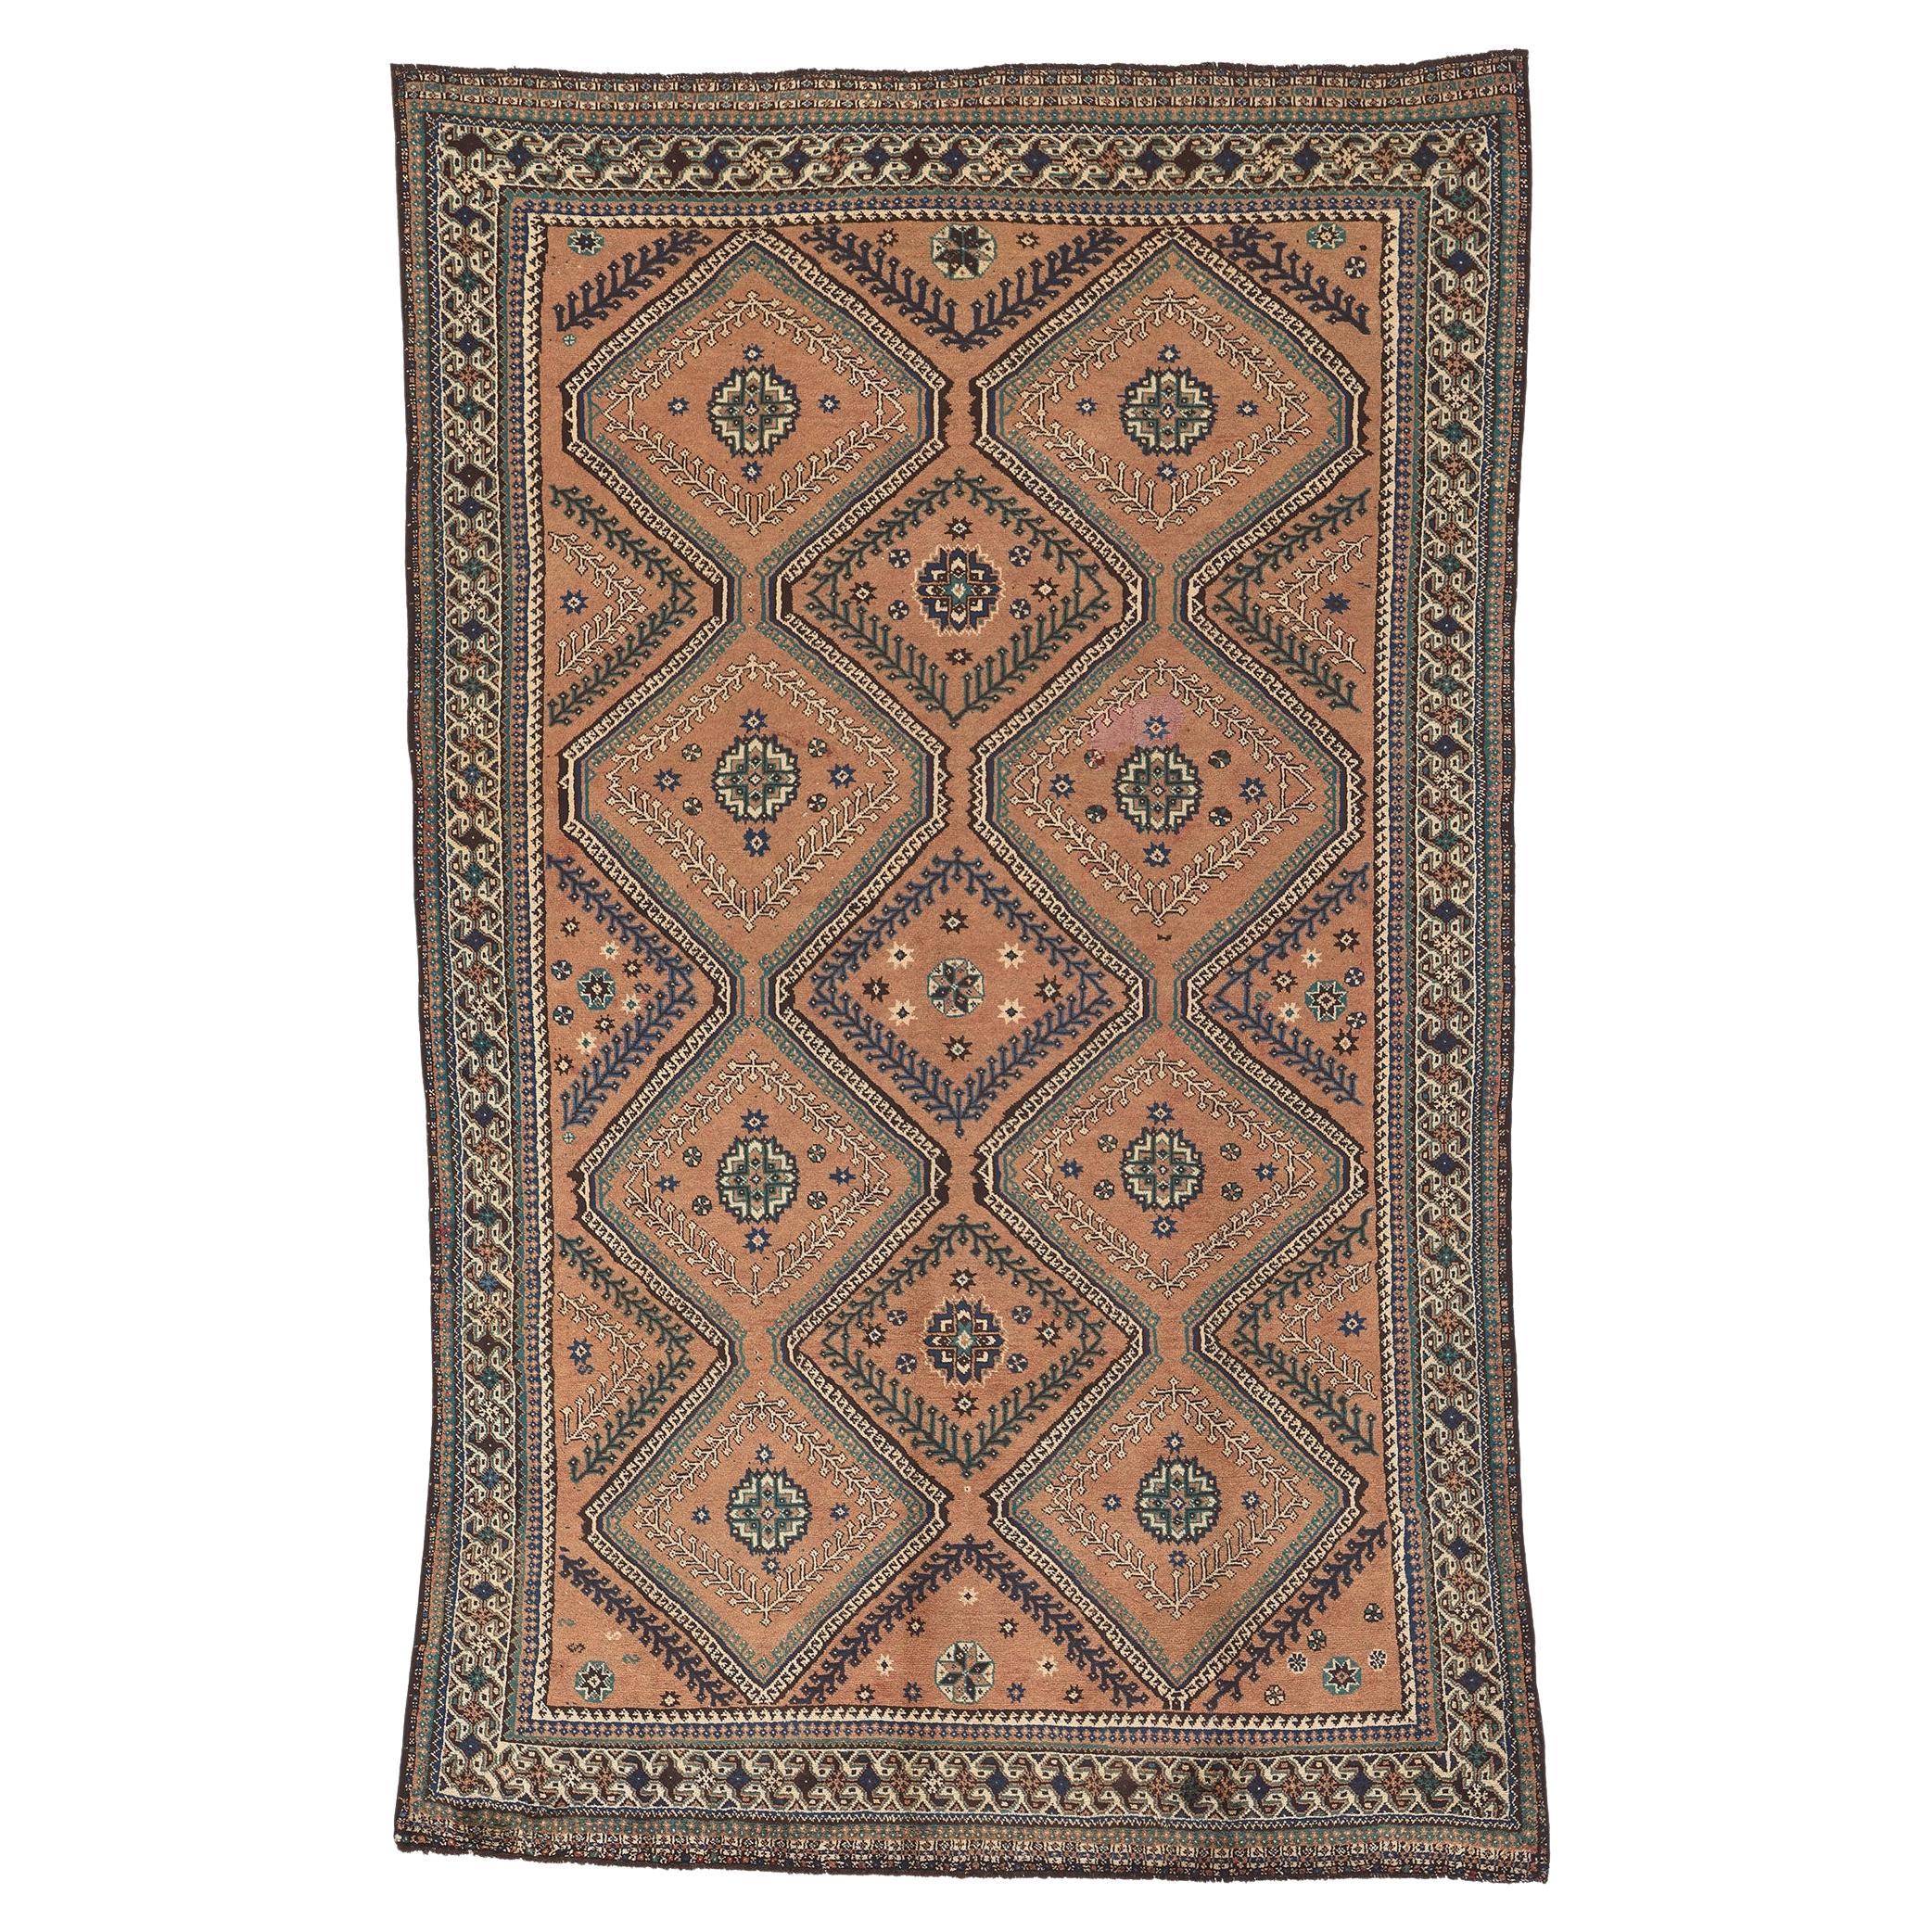 Erdfarbener persischer Shiraz-Teppich im Vintage-Stil, Cozy Nomad Meets Beguiling Charm, Erdtöne